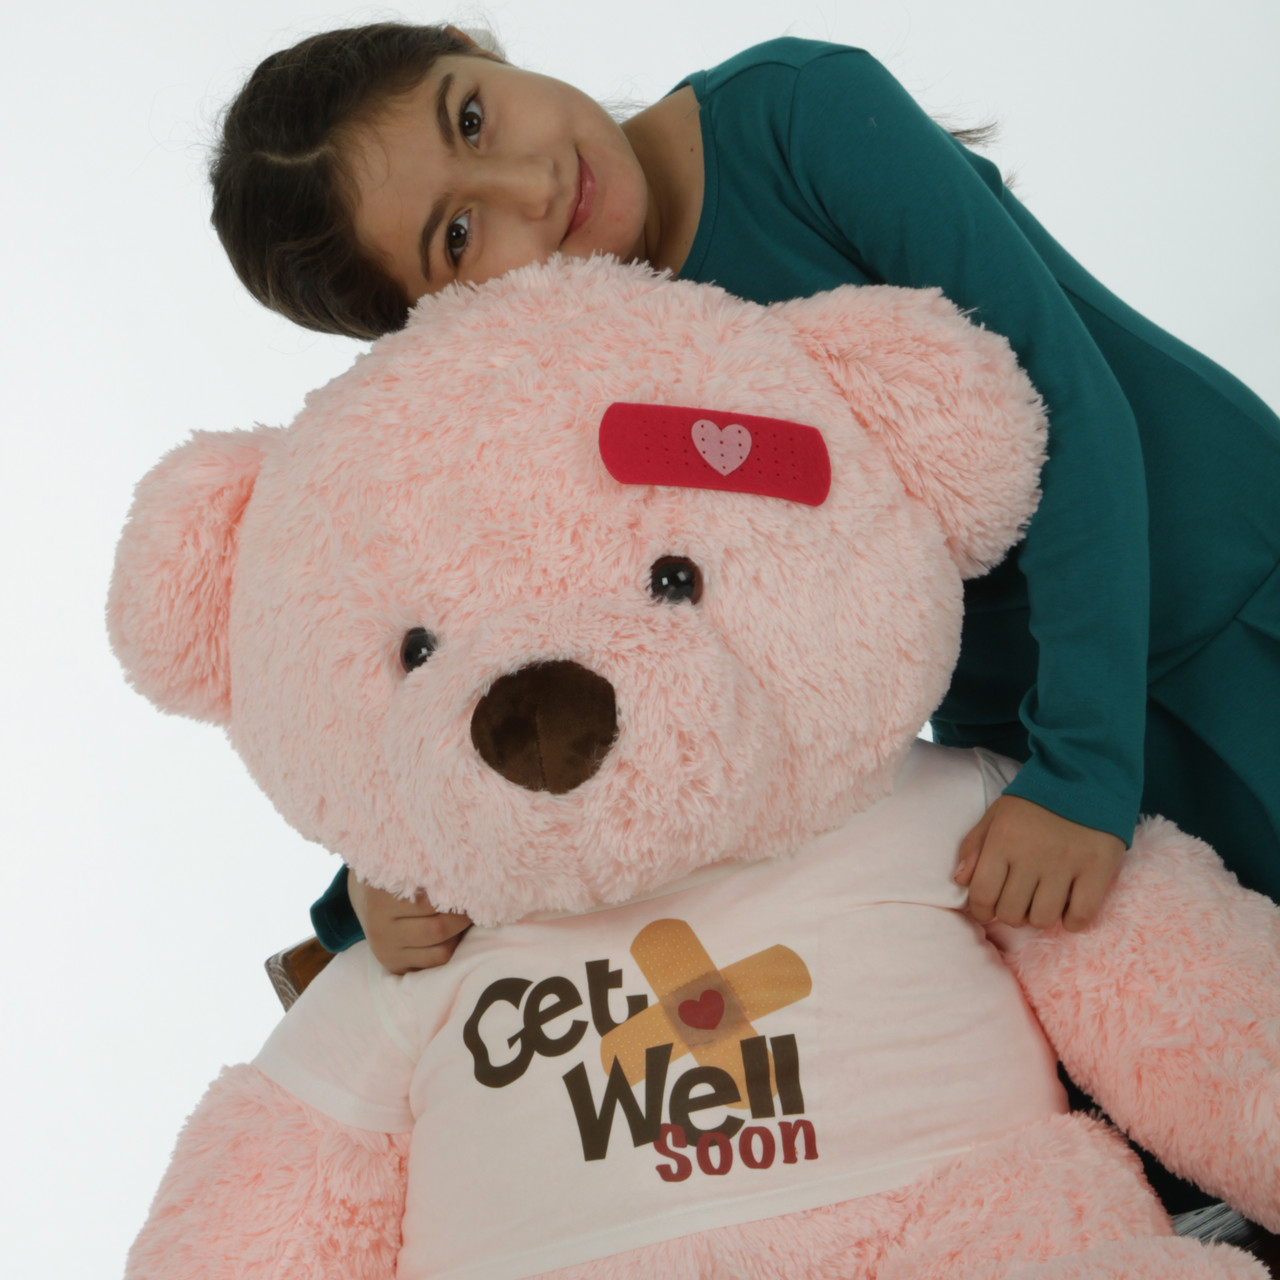 NEW - GET WELL SOON NANA - Teddy Bear - Adorable Soft Cute Cuddly